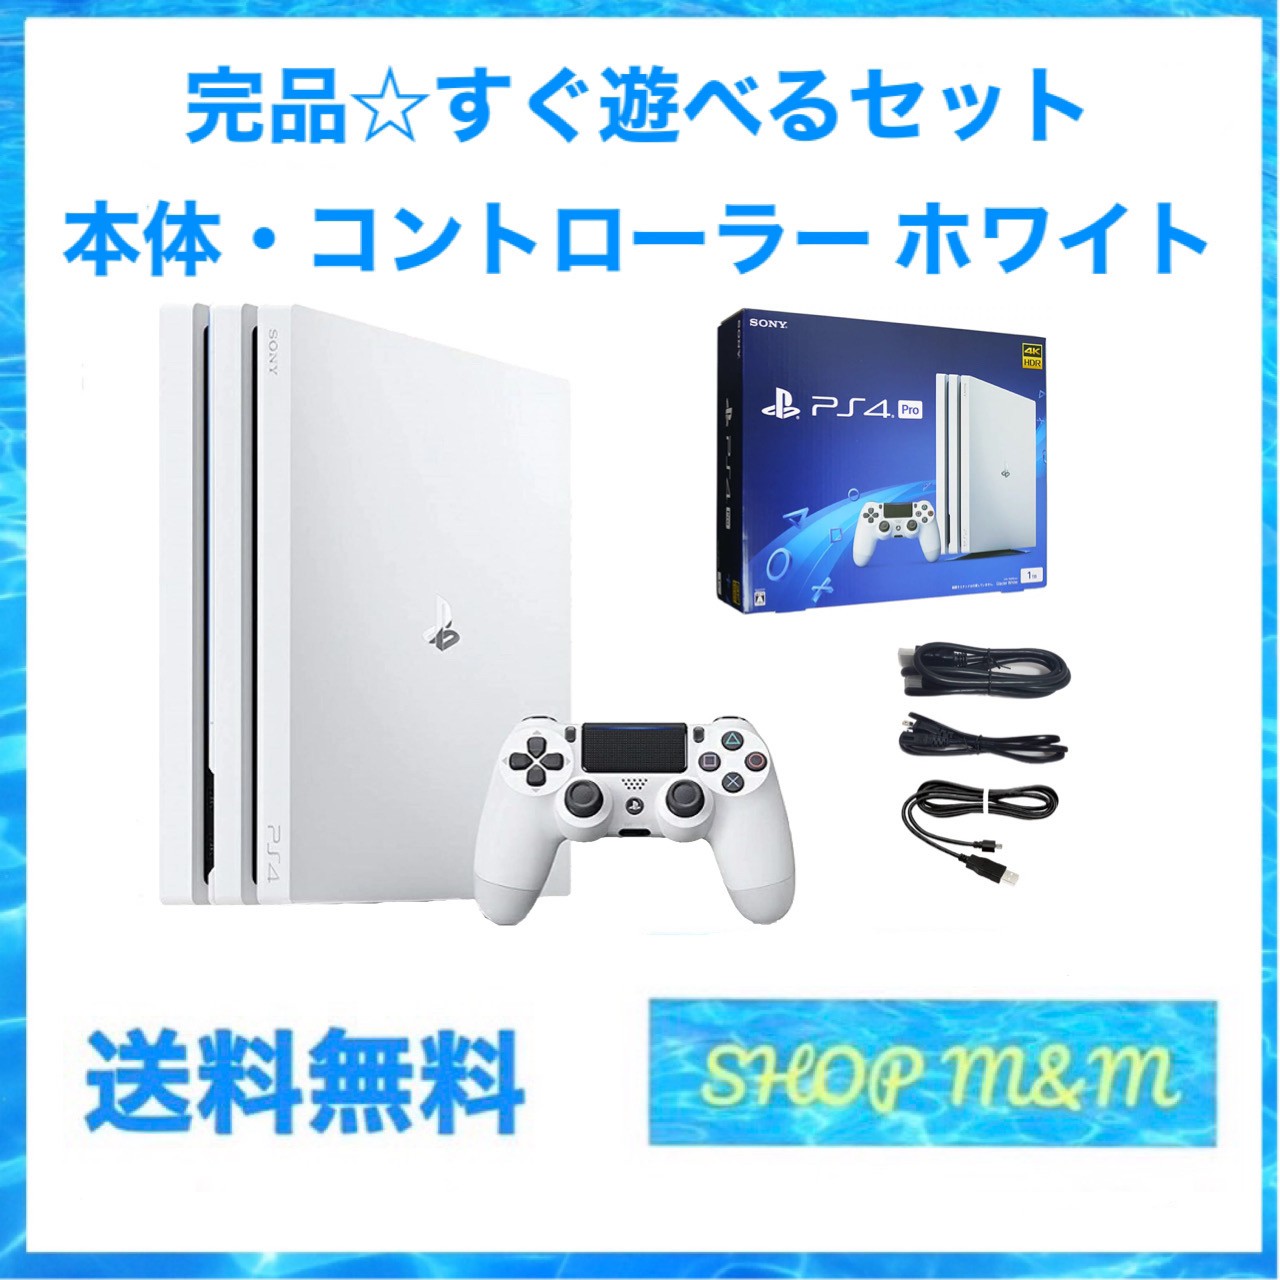 販売公式SONY PlayStation4 Pro 本体 CUH-7200BB01 家庭用ゲーム機本体